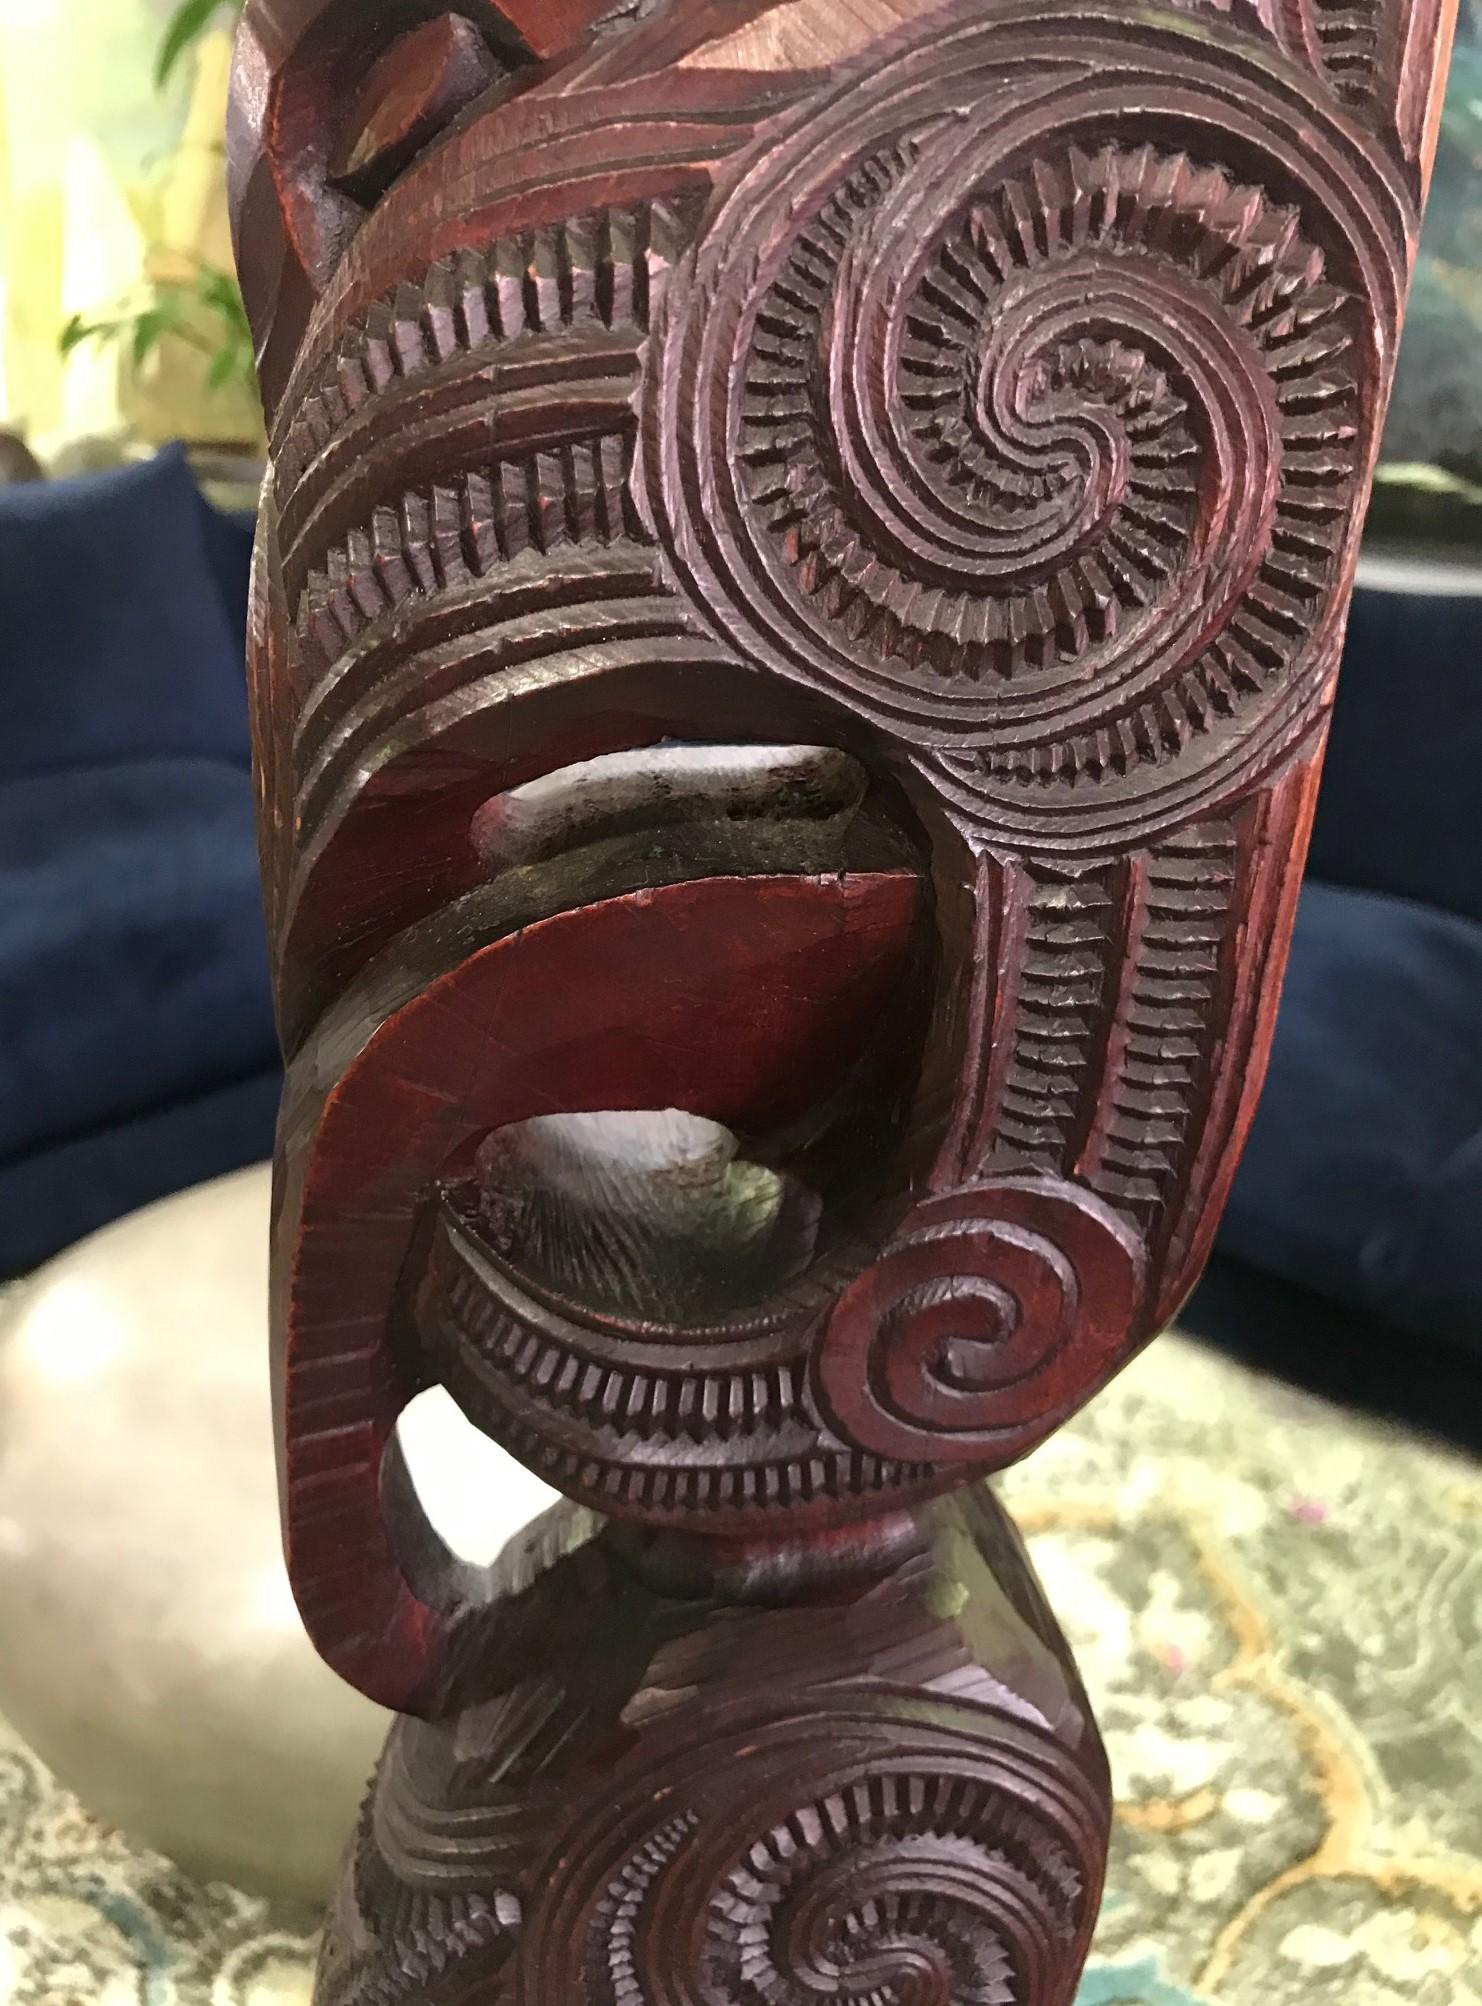 Shell Maori New Zealand Large Carved Wood TOTEM Tribal Figure